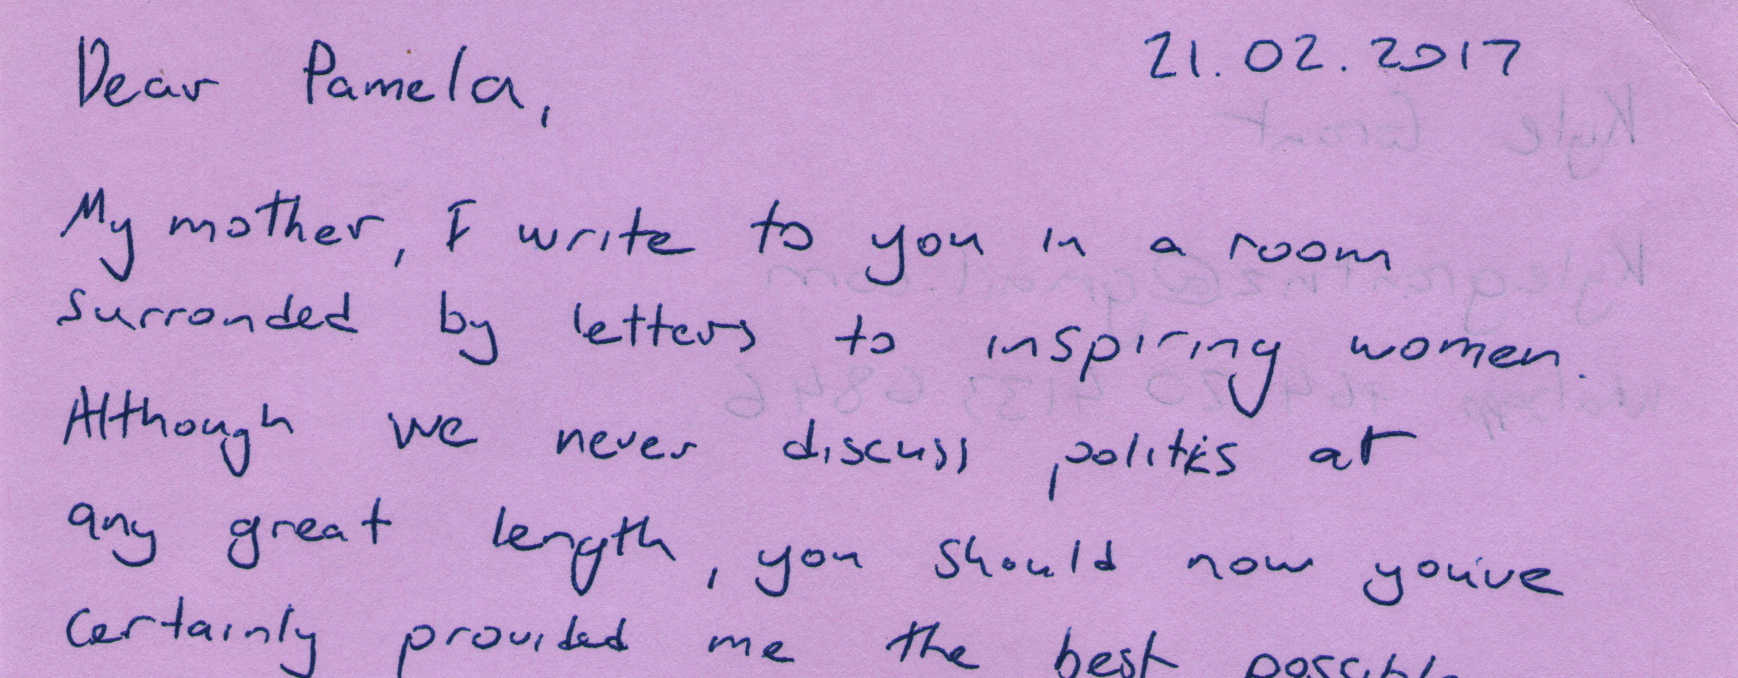 Letter to Pamela Grant from Kyle Grant